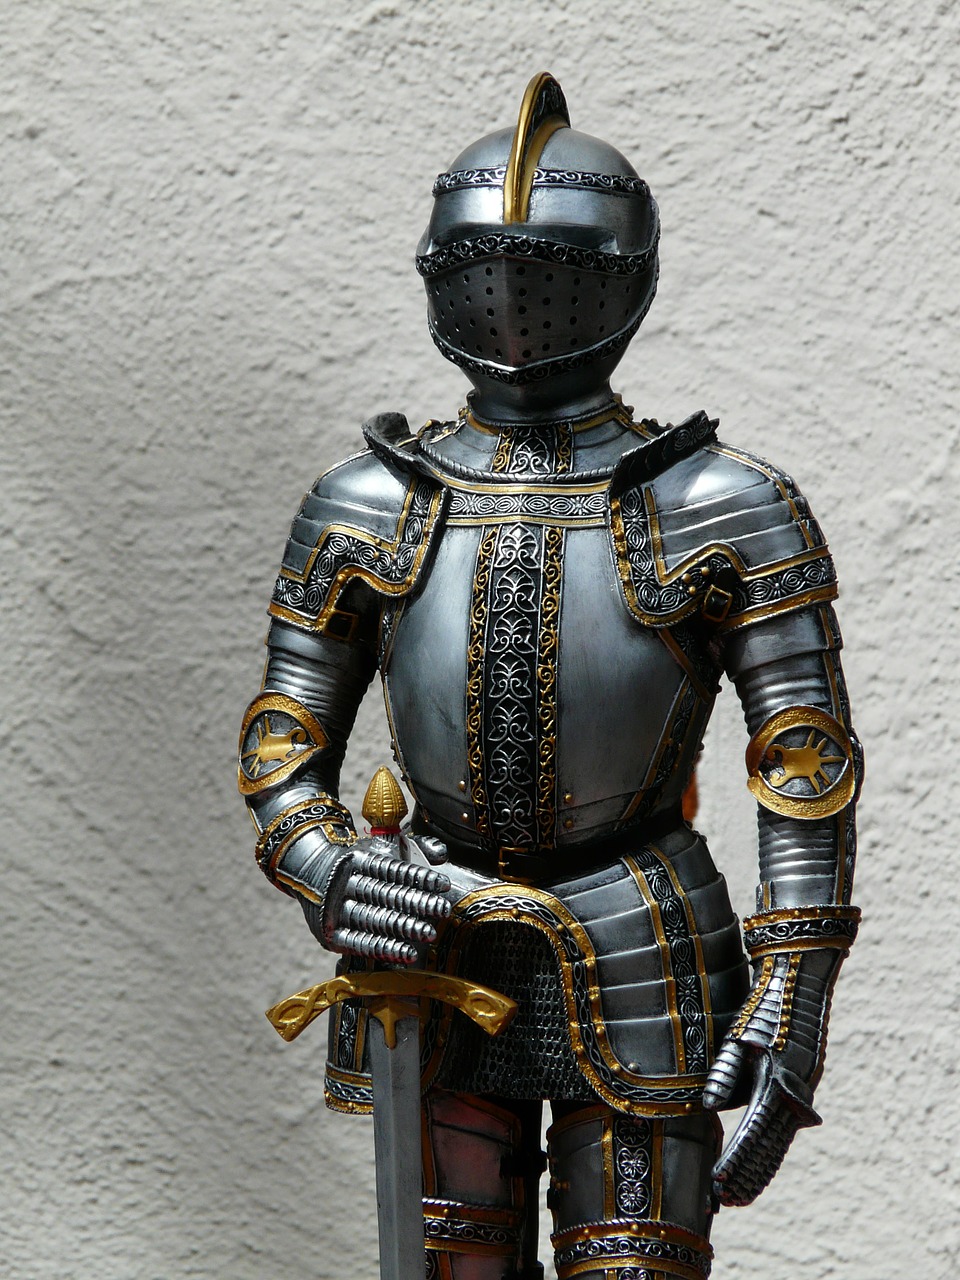 knight armor ritterruestung free photo